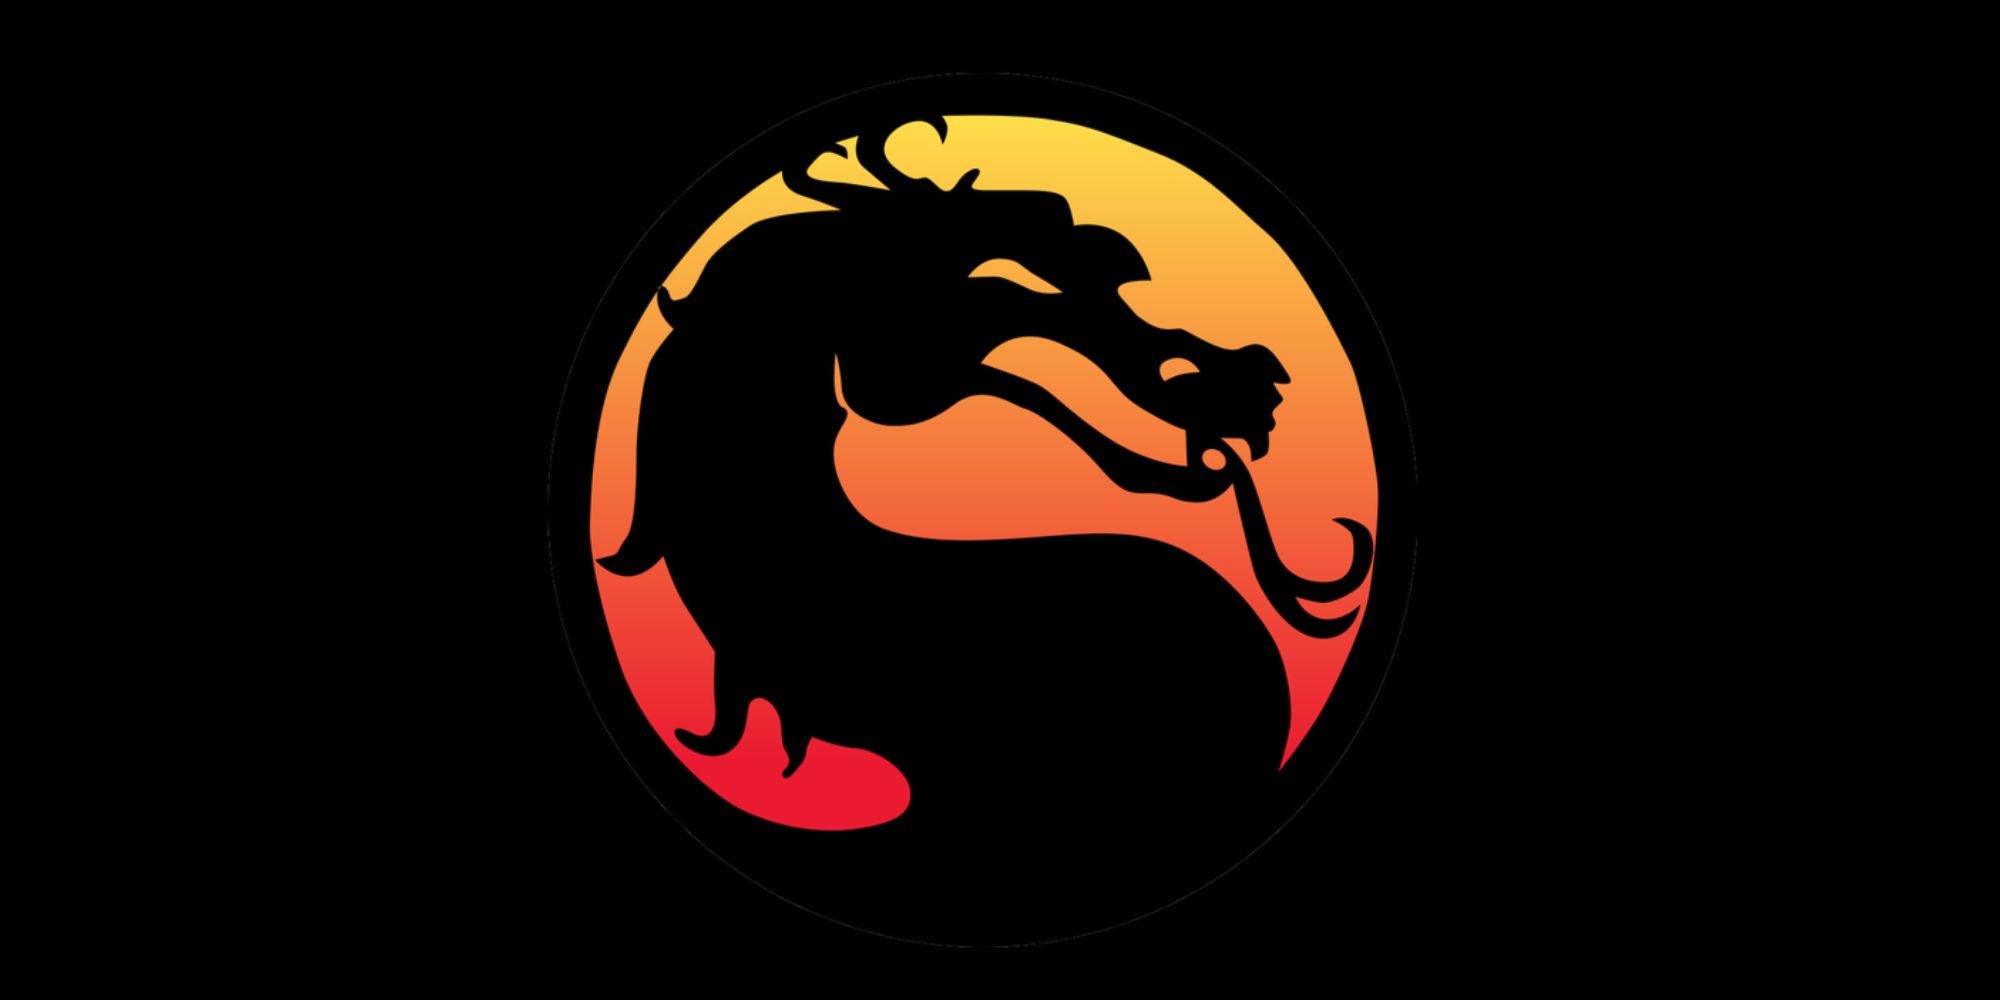 Mortal Kombat 30th Anniversary - CHARACTERS